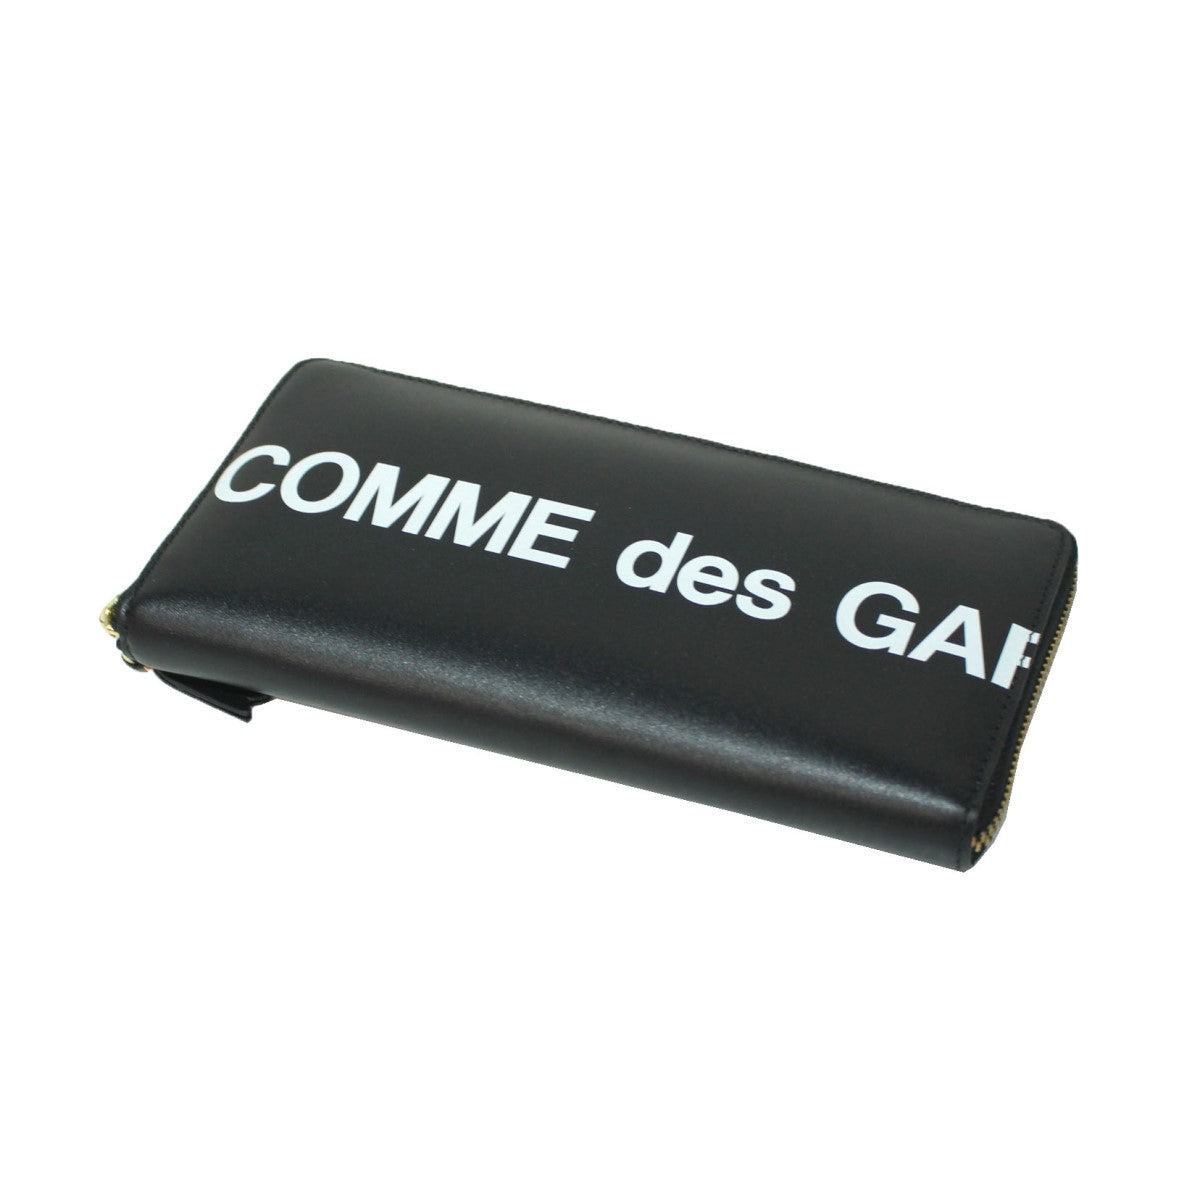 COMME des GARCONS(コムデギャルソン) ロゴプリント長財布 ウォレット 